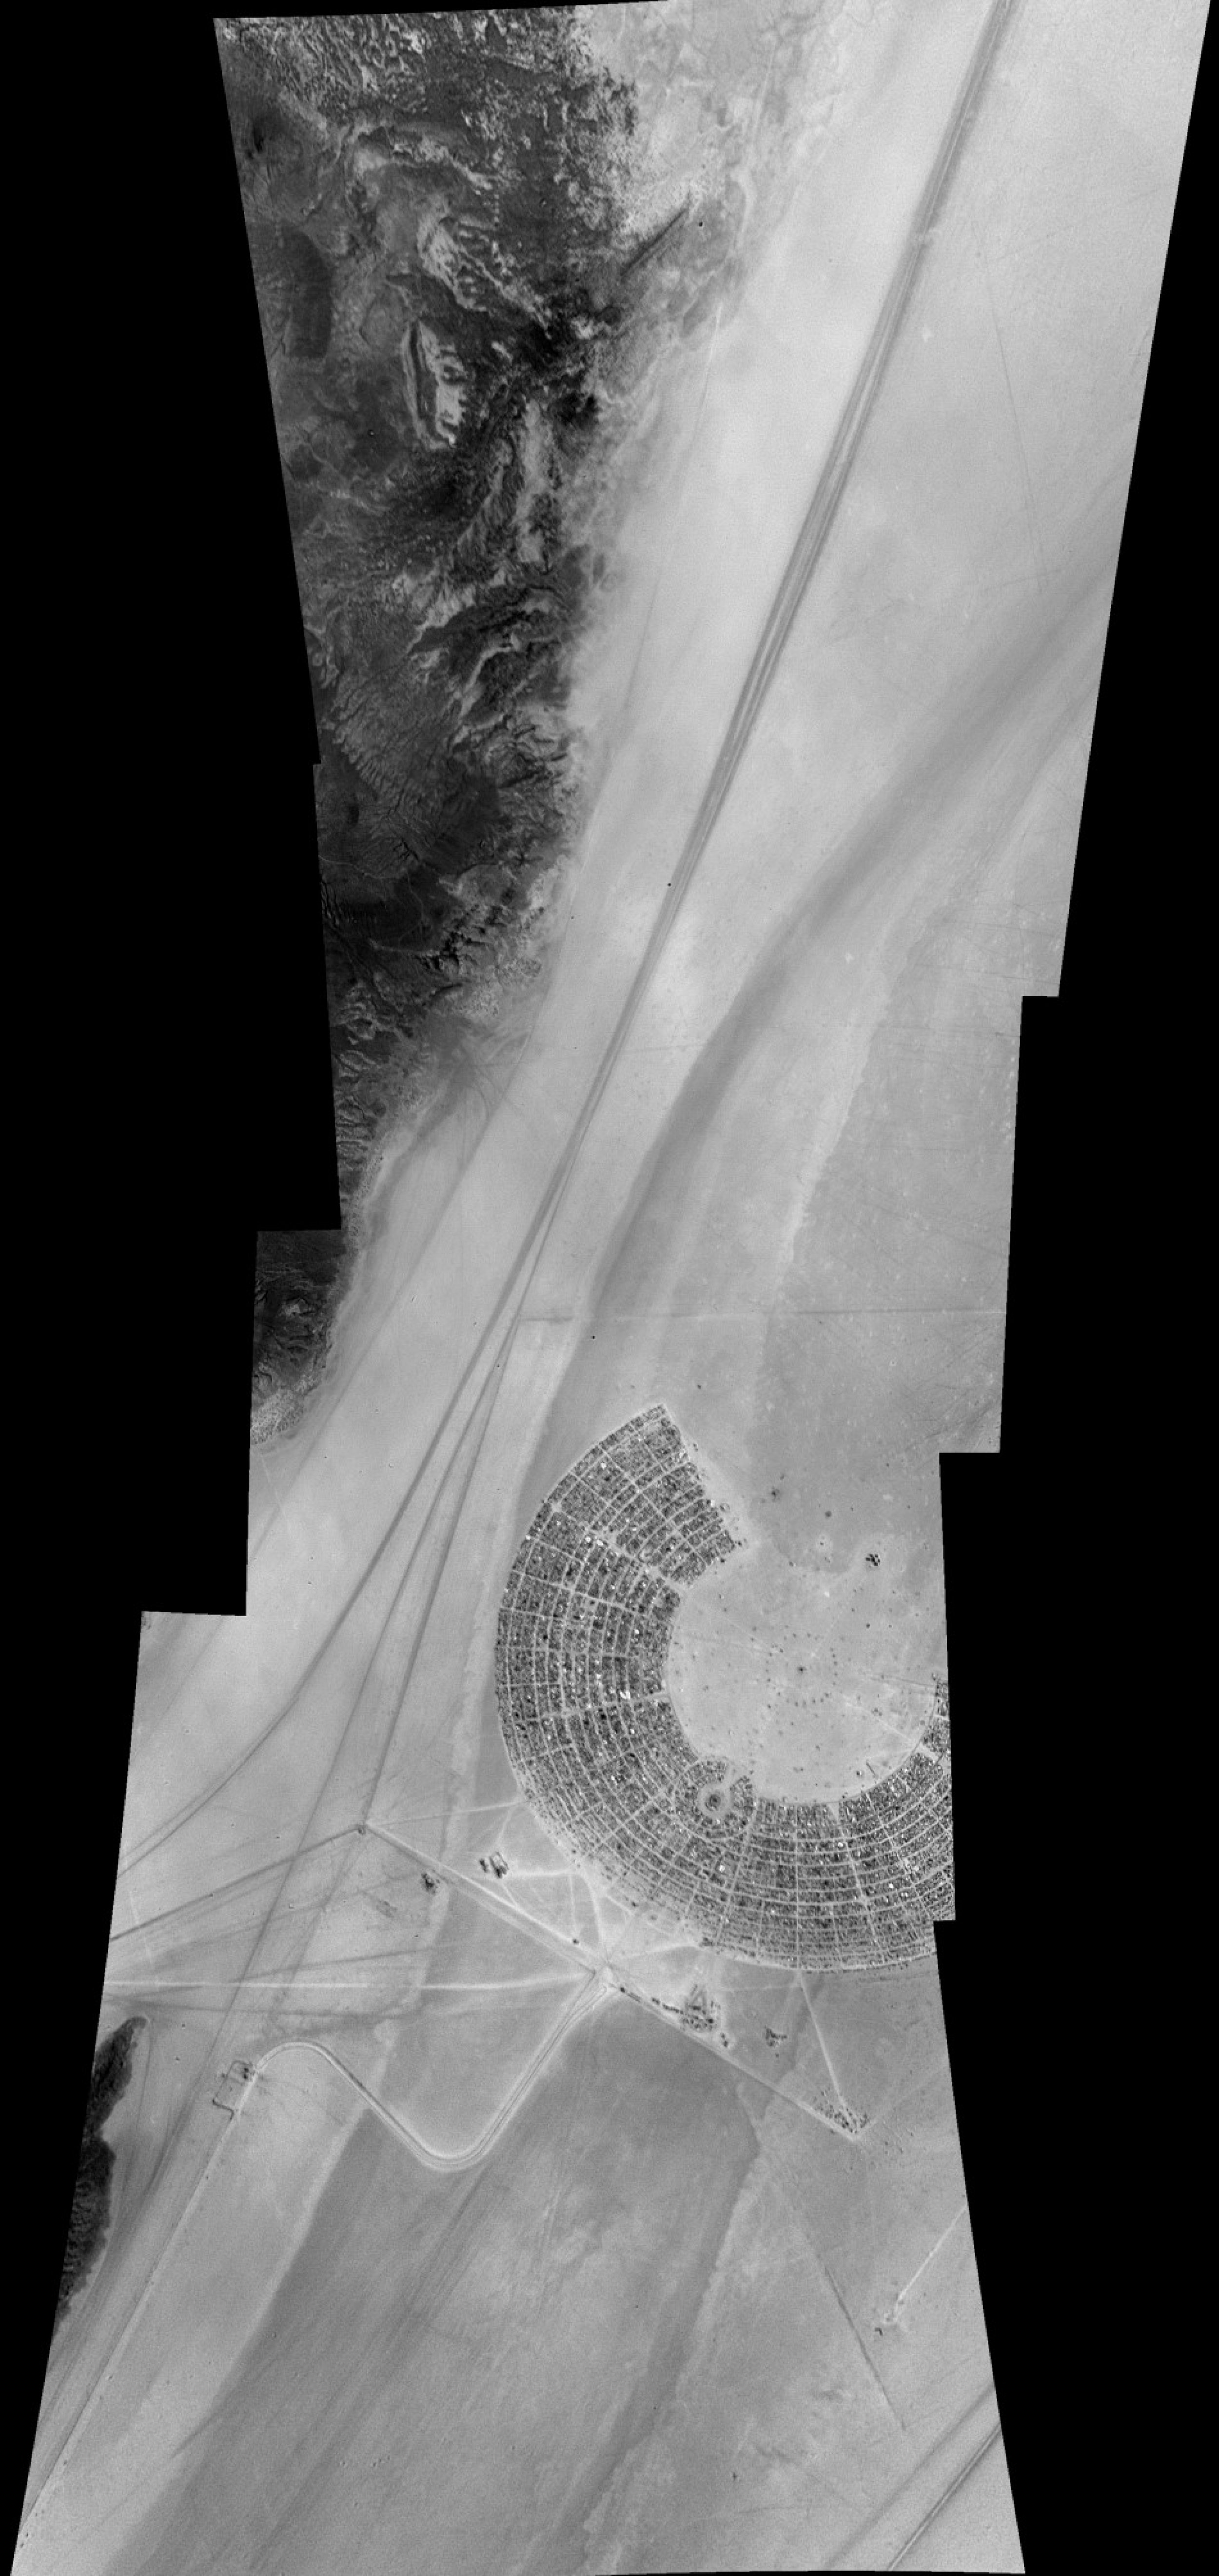 ESA Releases Satellite Image of Burning Man (EXCLUSIVE IMAGES)